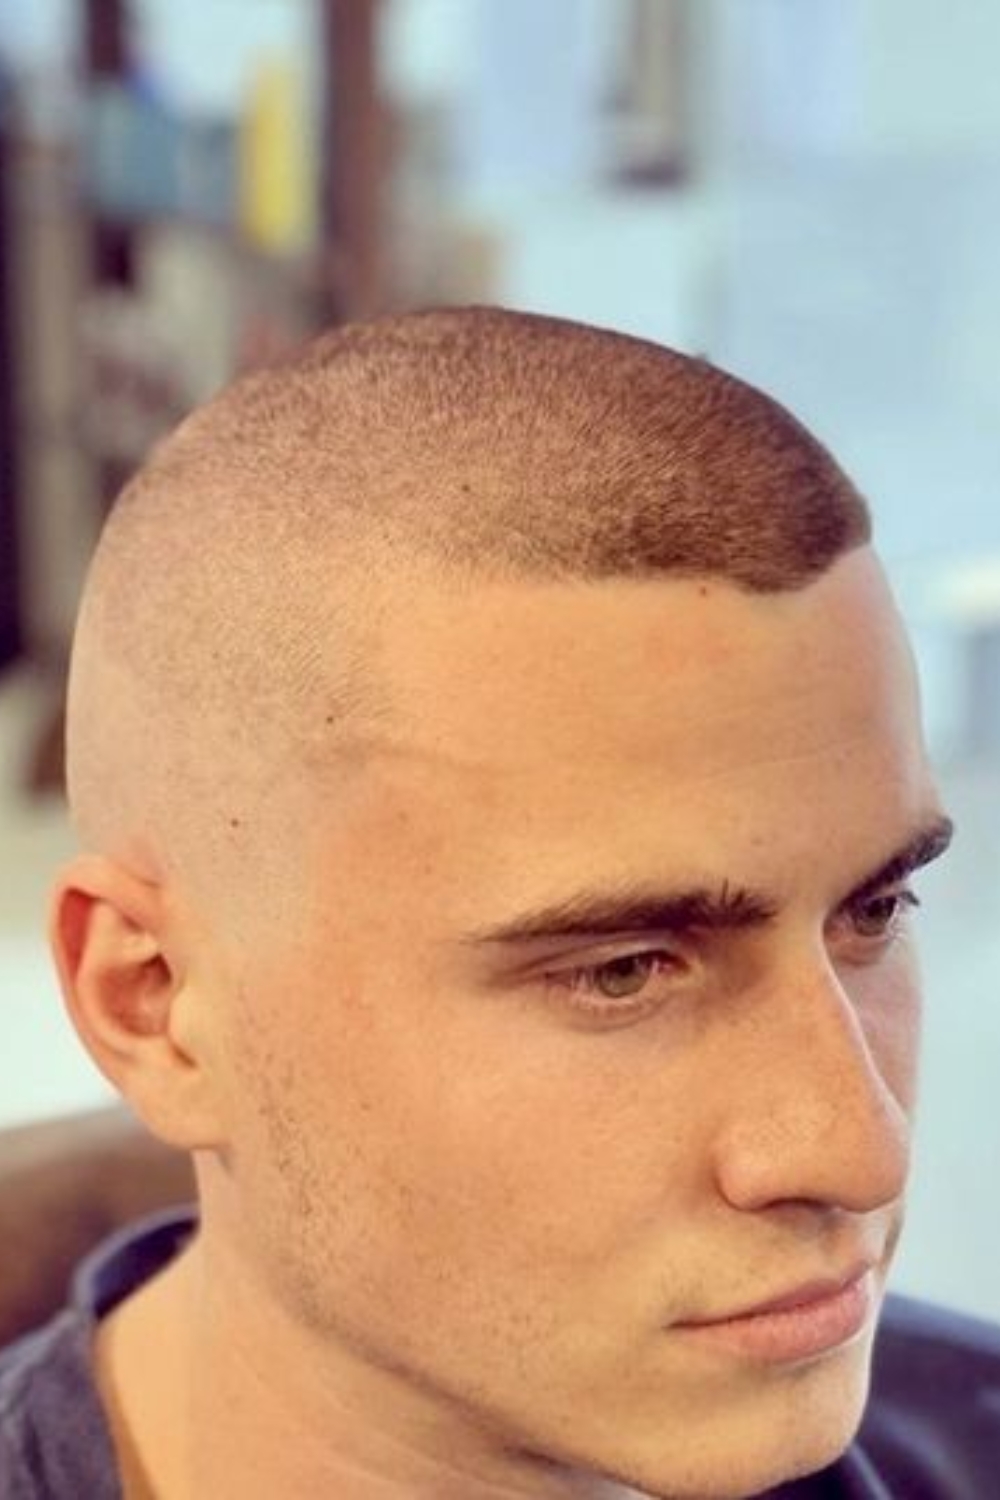 Confident Haircuts for Bald Men